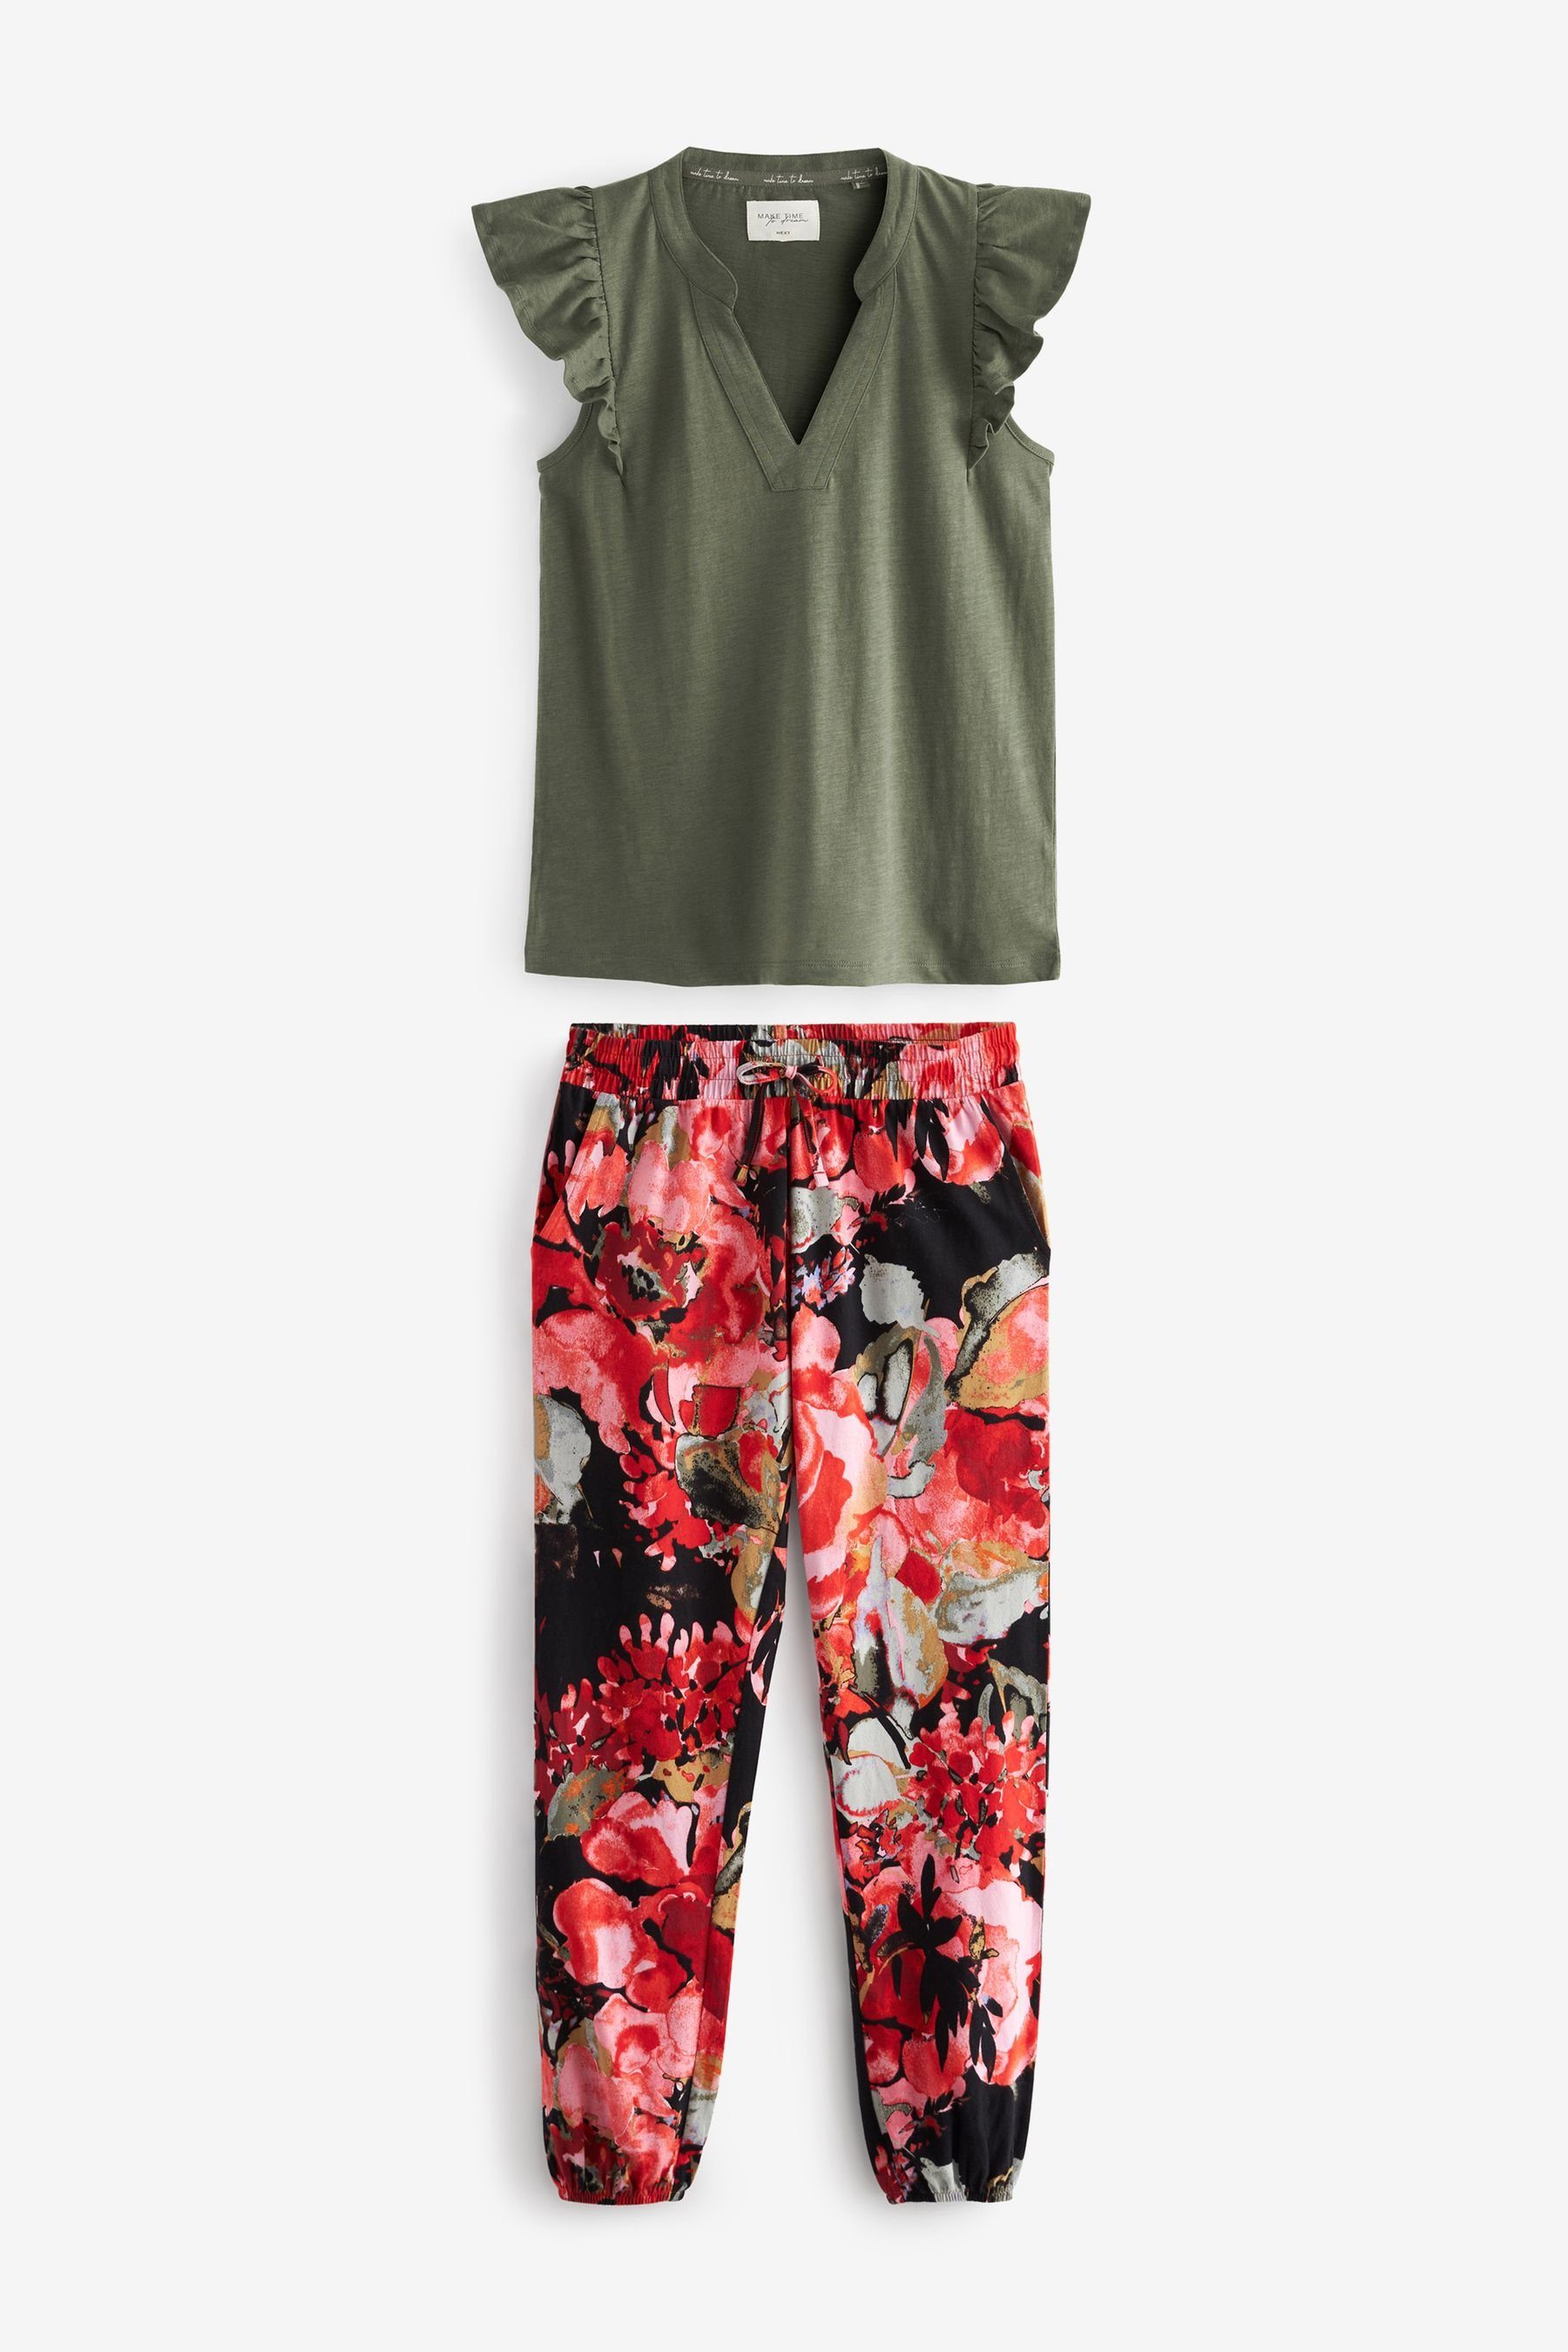 Pyjama tlg) Khaki/Red (2 Baumwolle Next Pyjama aus Floral